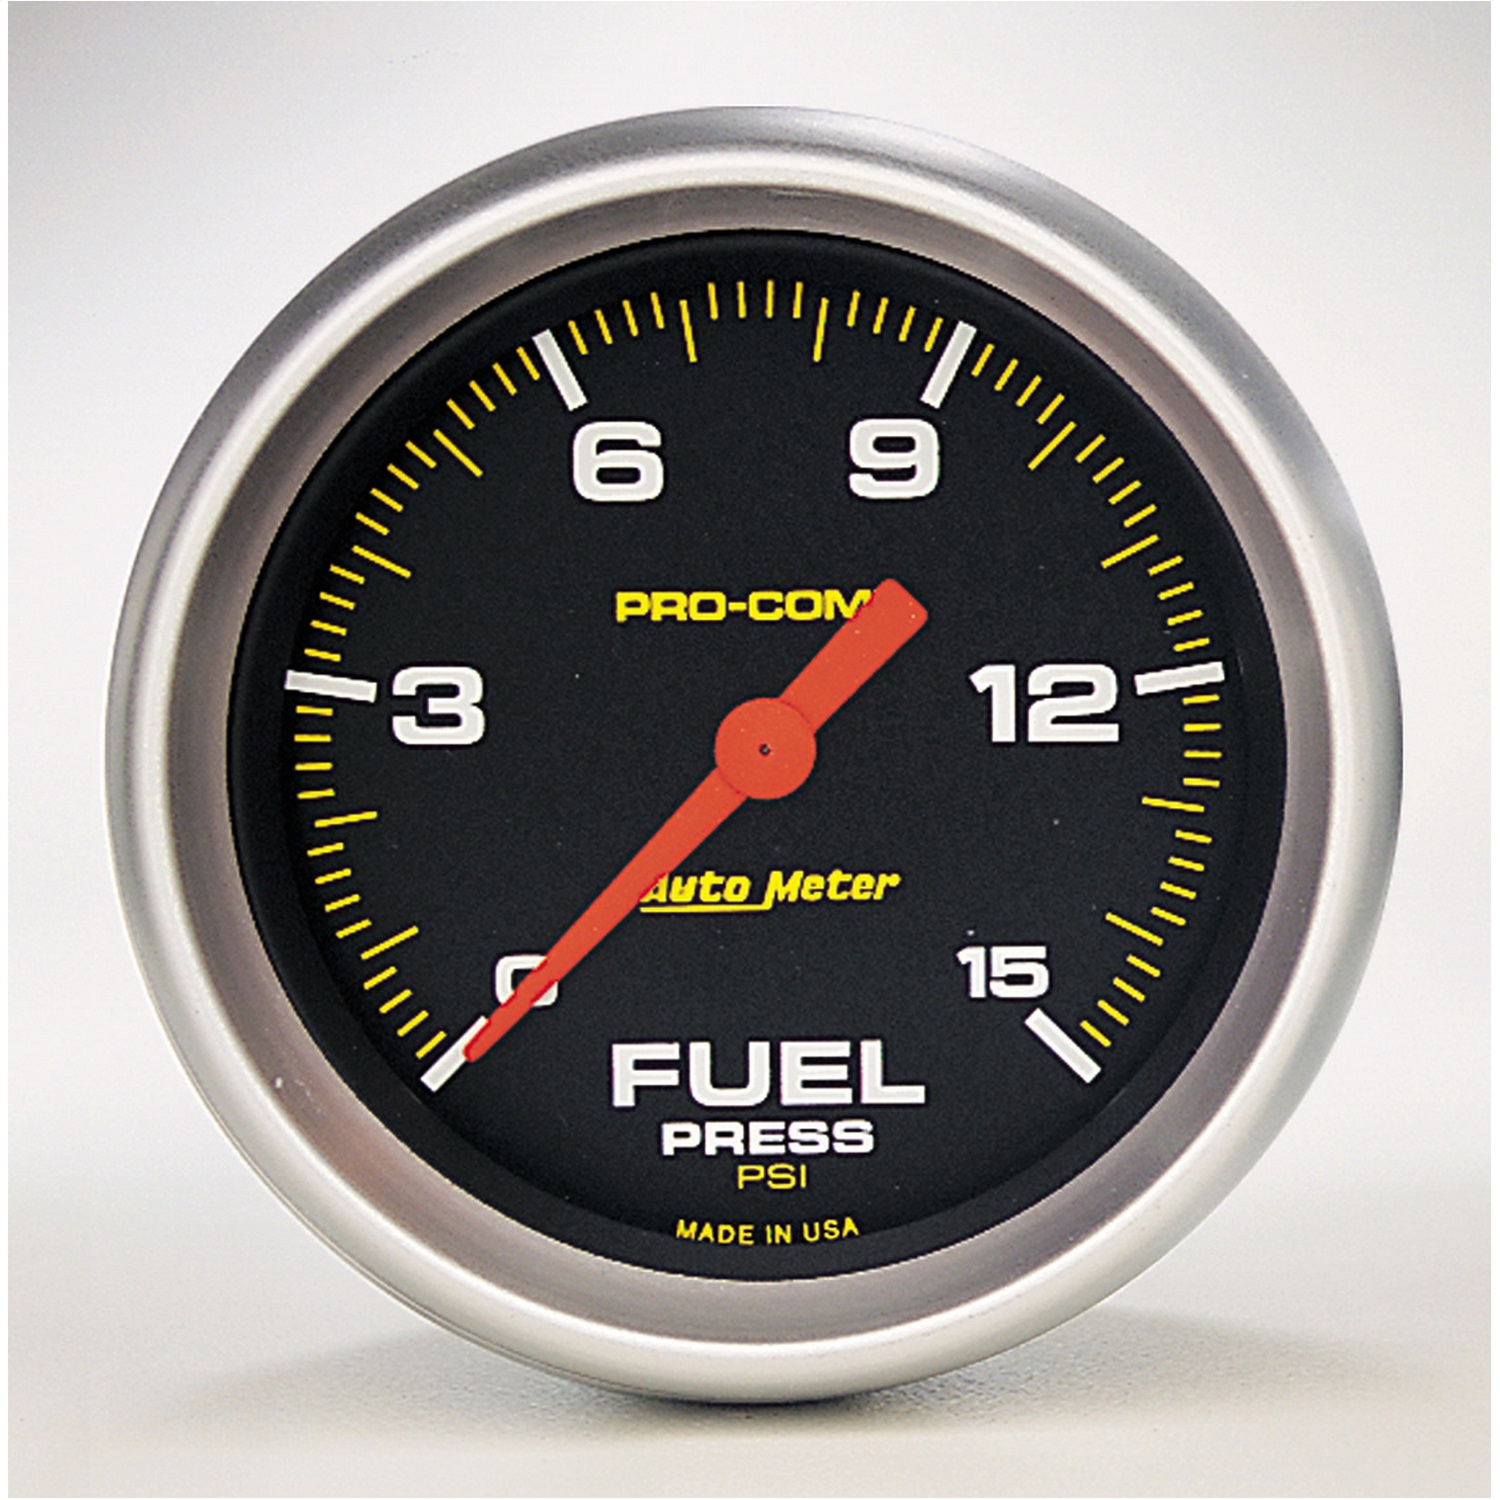 Auto Meter Auto Meter 5461 Pro-Comp; Electric Fuel Pressure Gauge